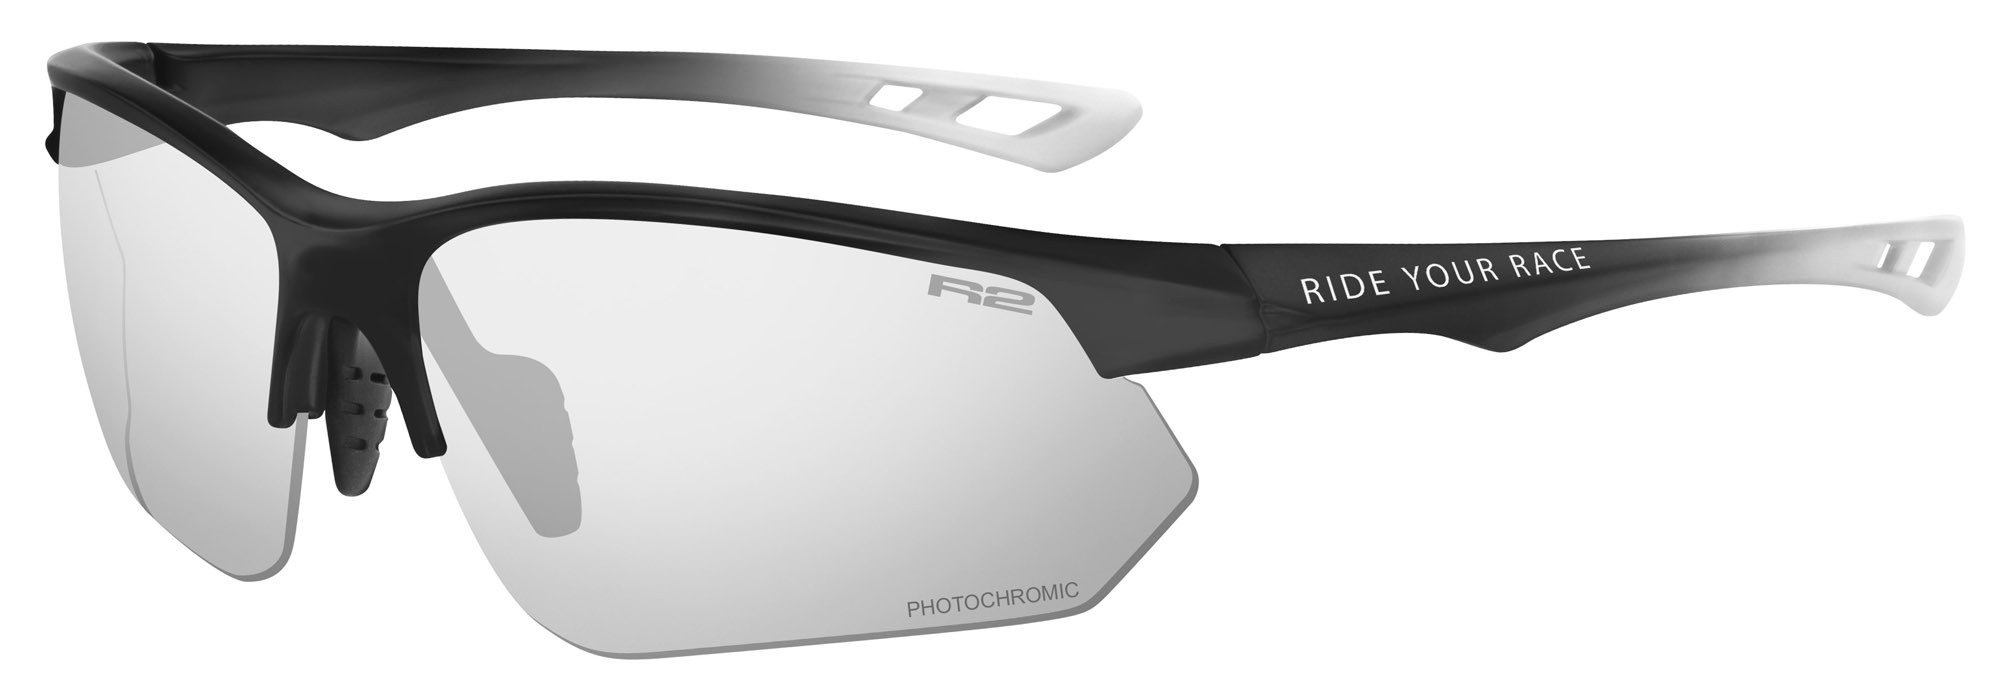 Photochromatic sunglasses R2 DROP AT099F standard